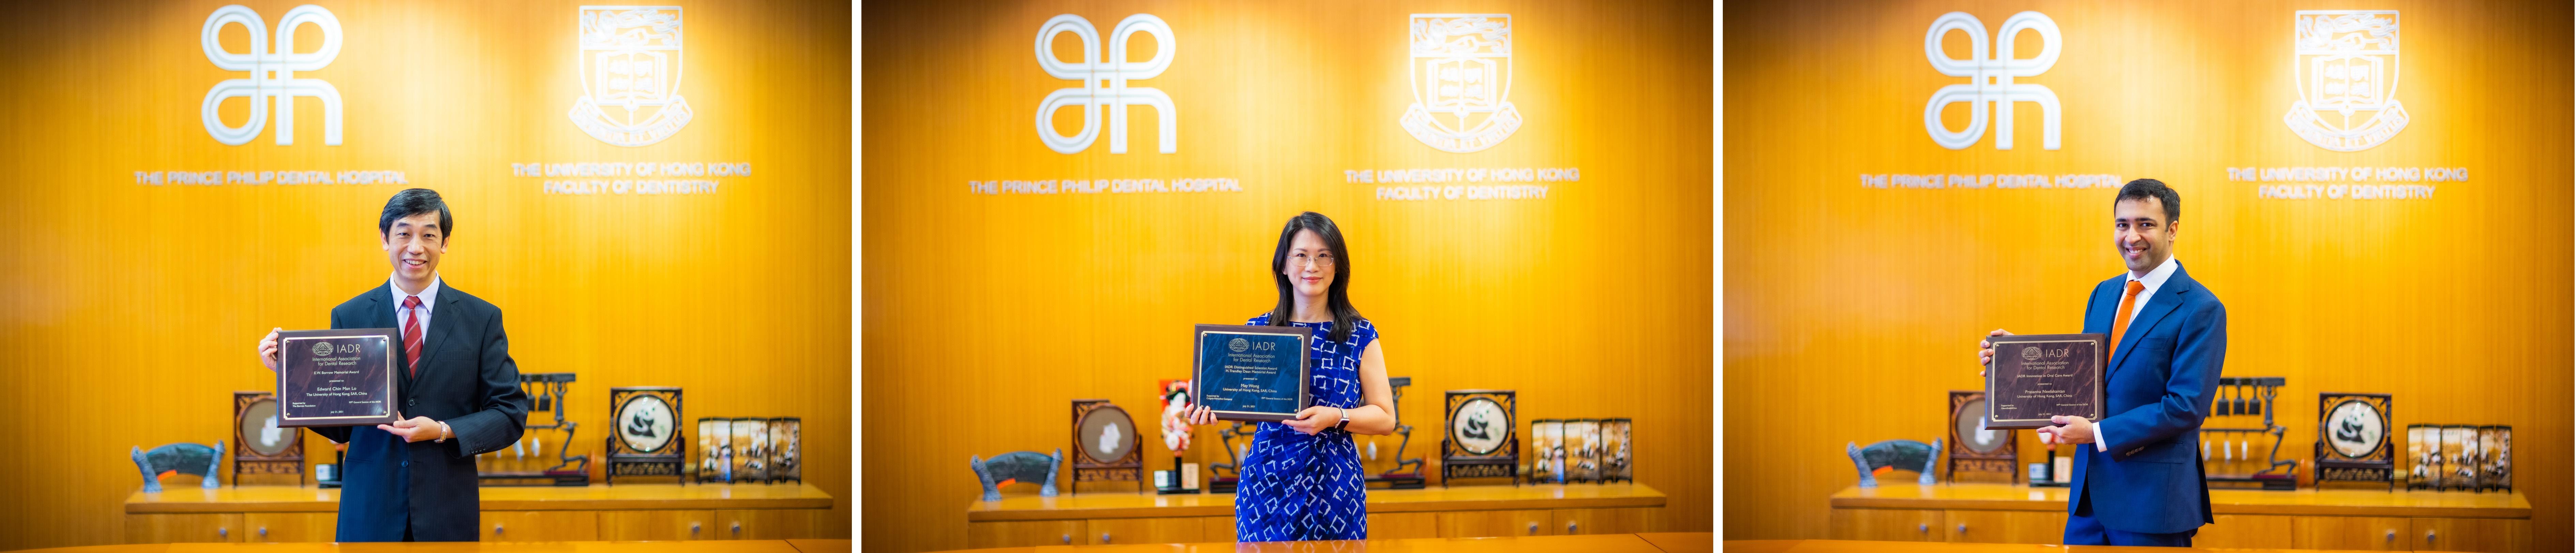 HKU Faculty of Dentistry members receive prestigious awards from International Association for Dental Research (IADR)